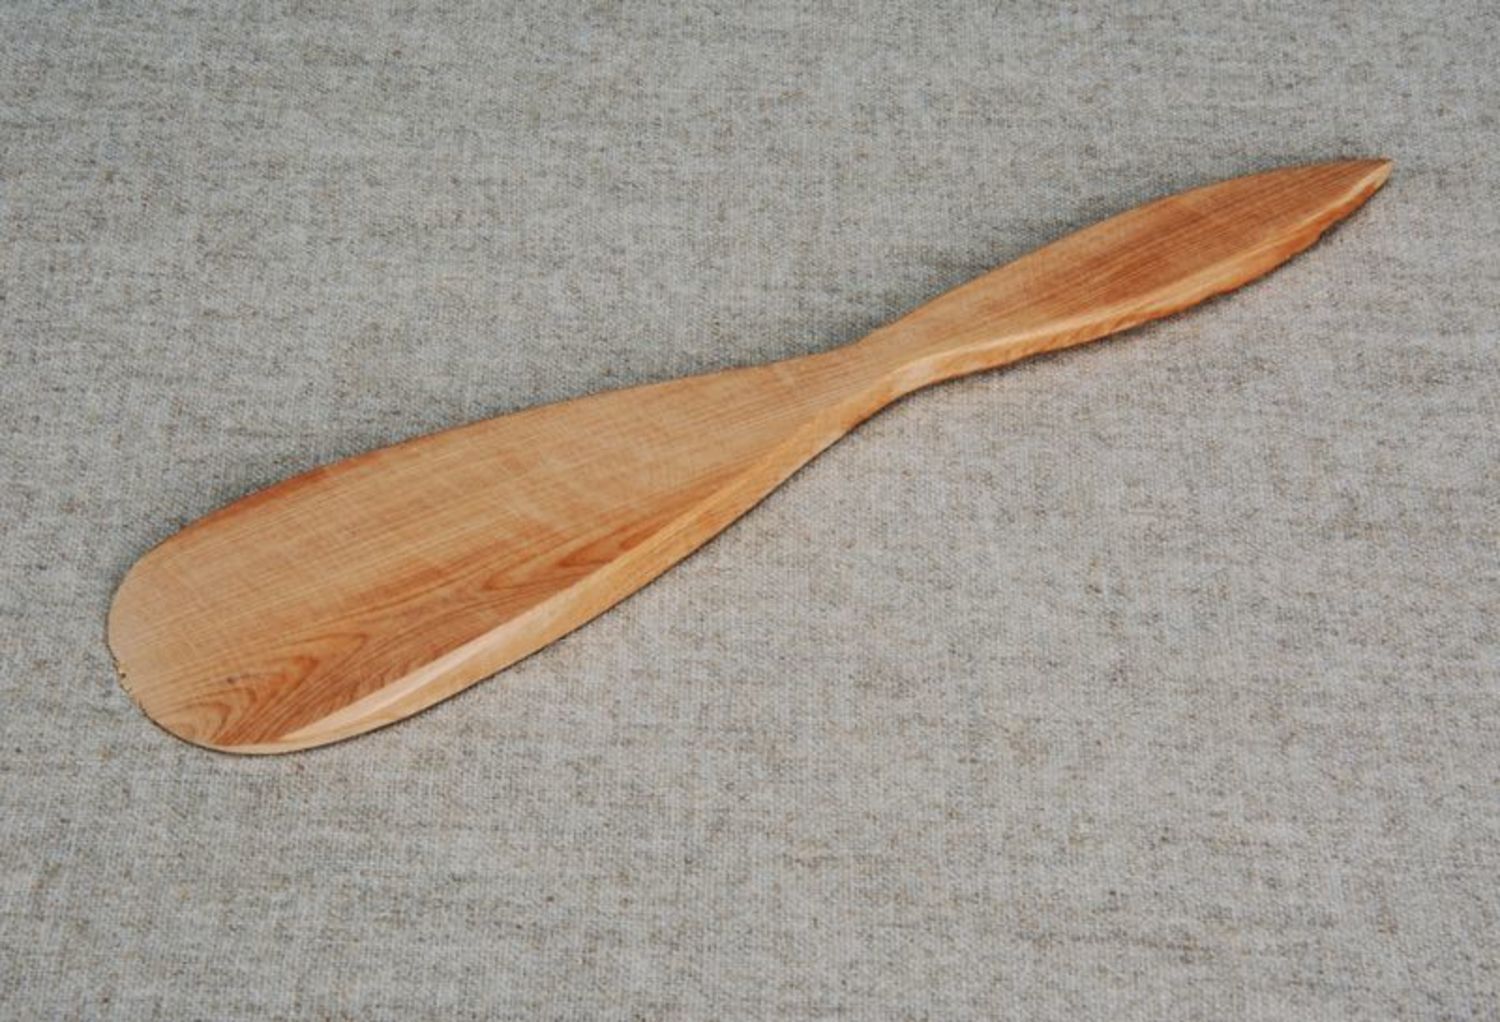 Paletta di legno per cucina fatta a mano cucchiaio di legno posate di legno
 foto 4